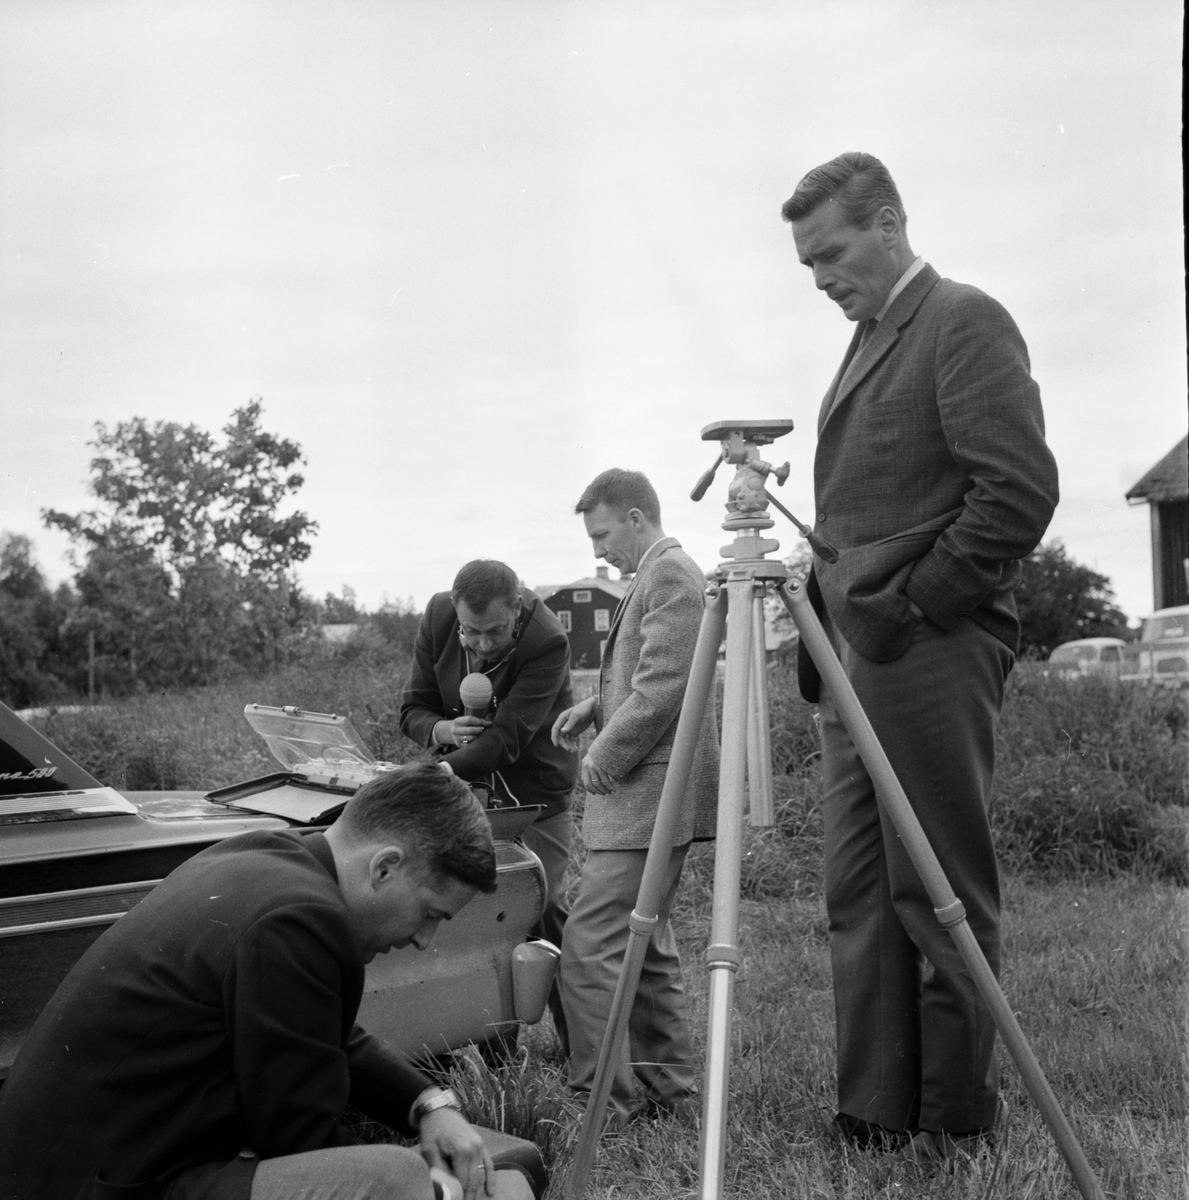 Landskapsleken,
Hårga-Bollnäs,
10 Juli 1965